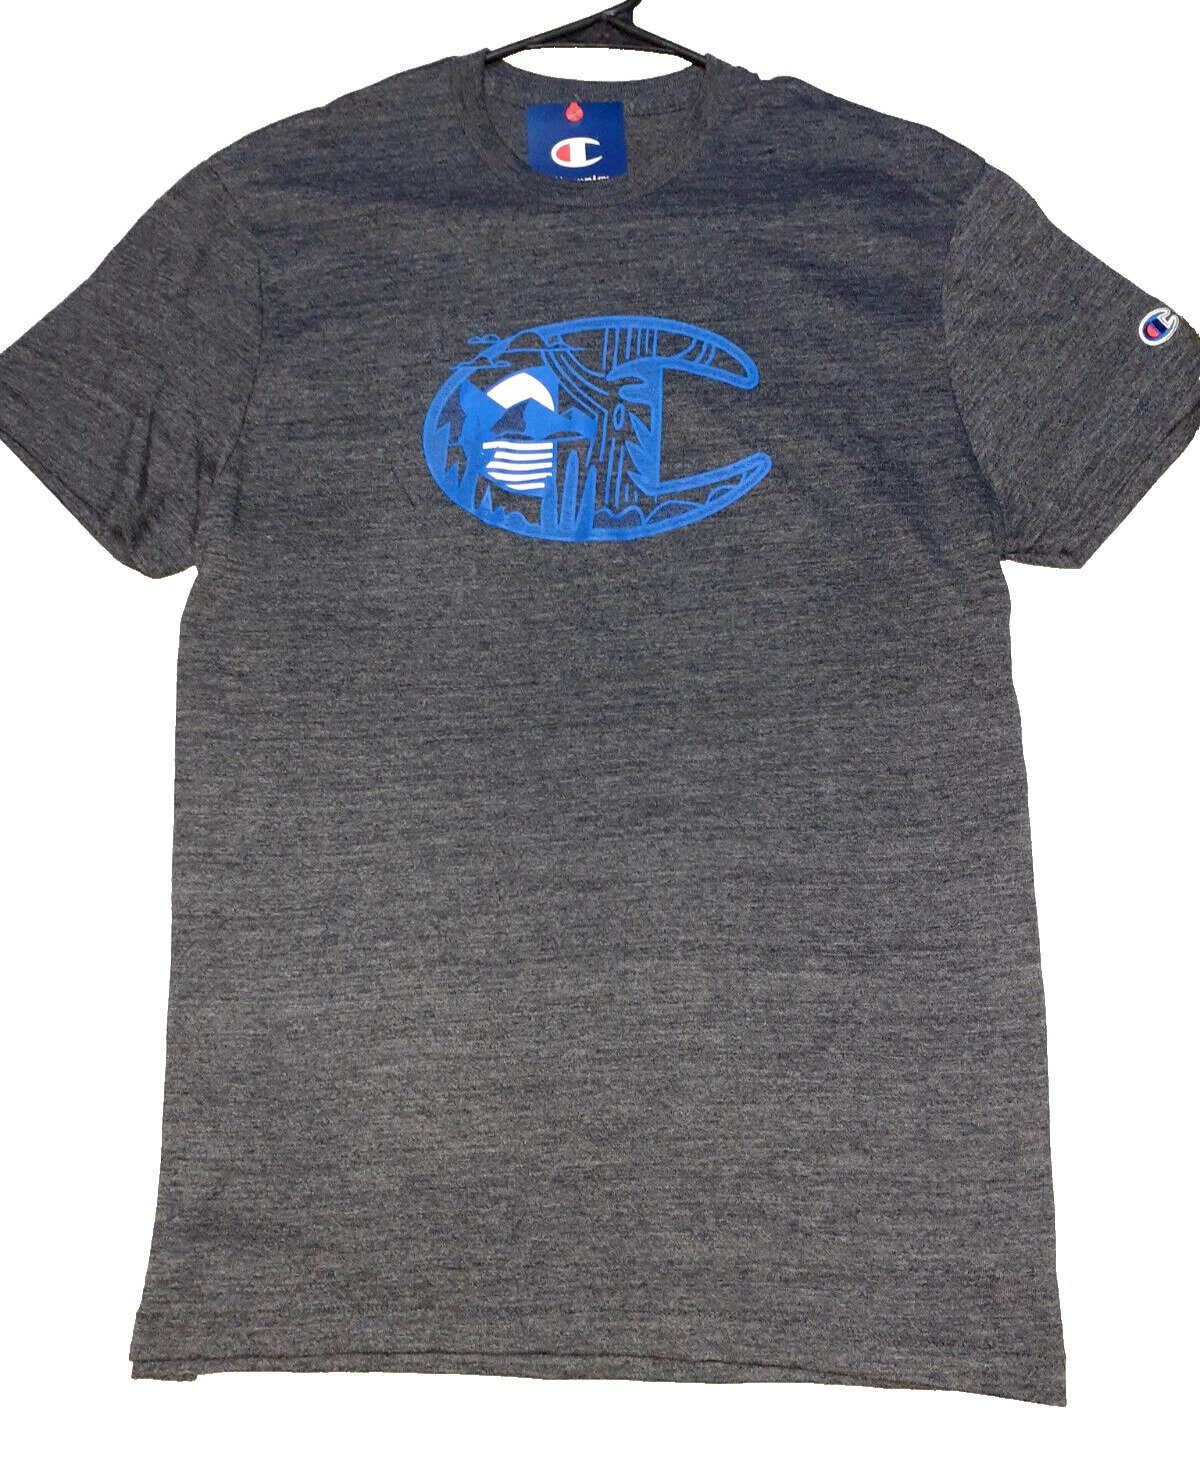 Champion Brand Mens T-Shirt M Medium Gray Blue Graphic Art Logo Short Sleeve NWT